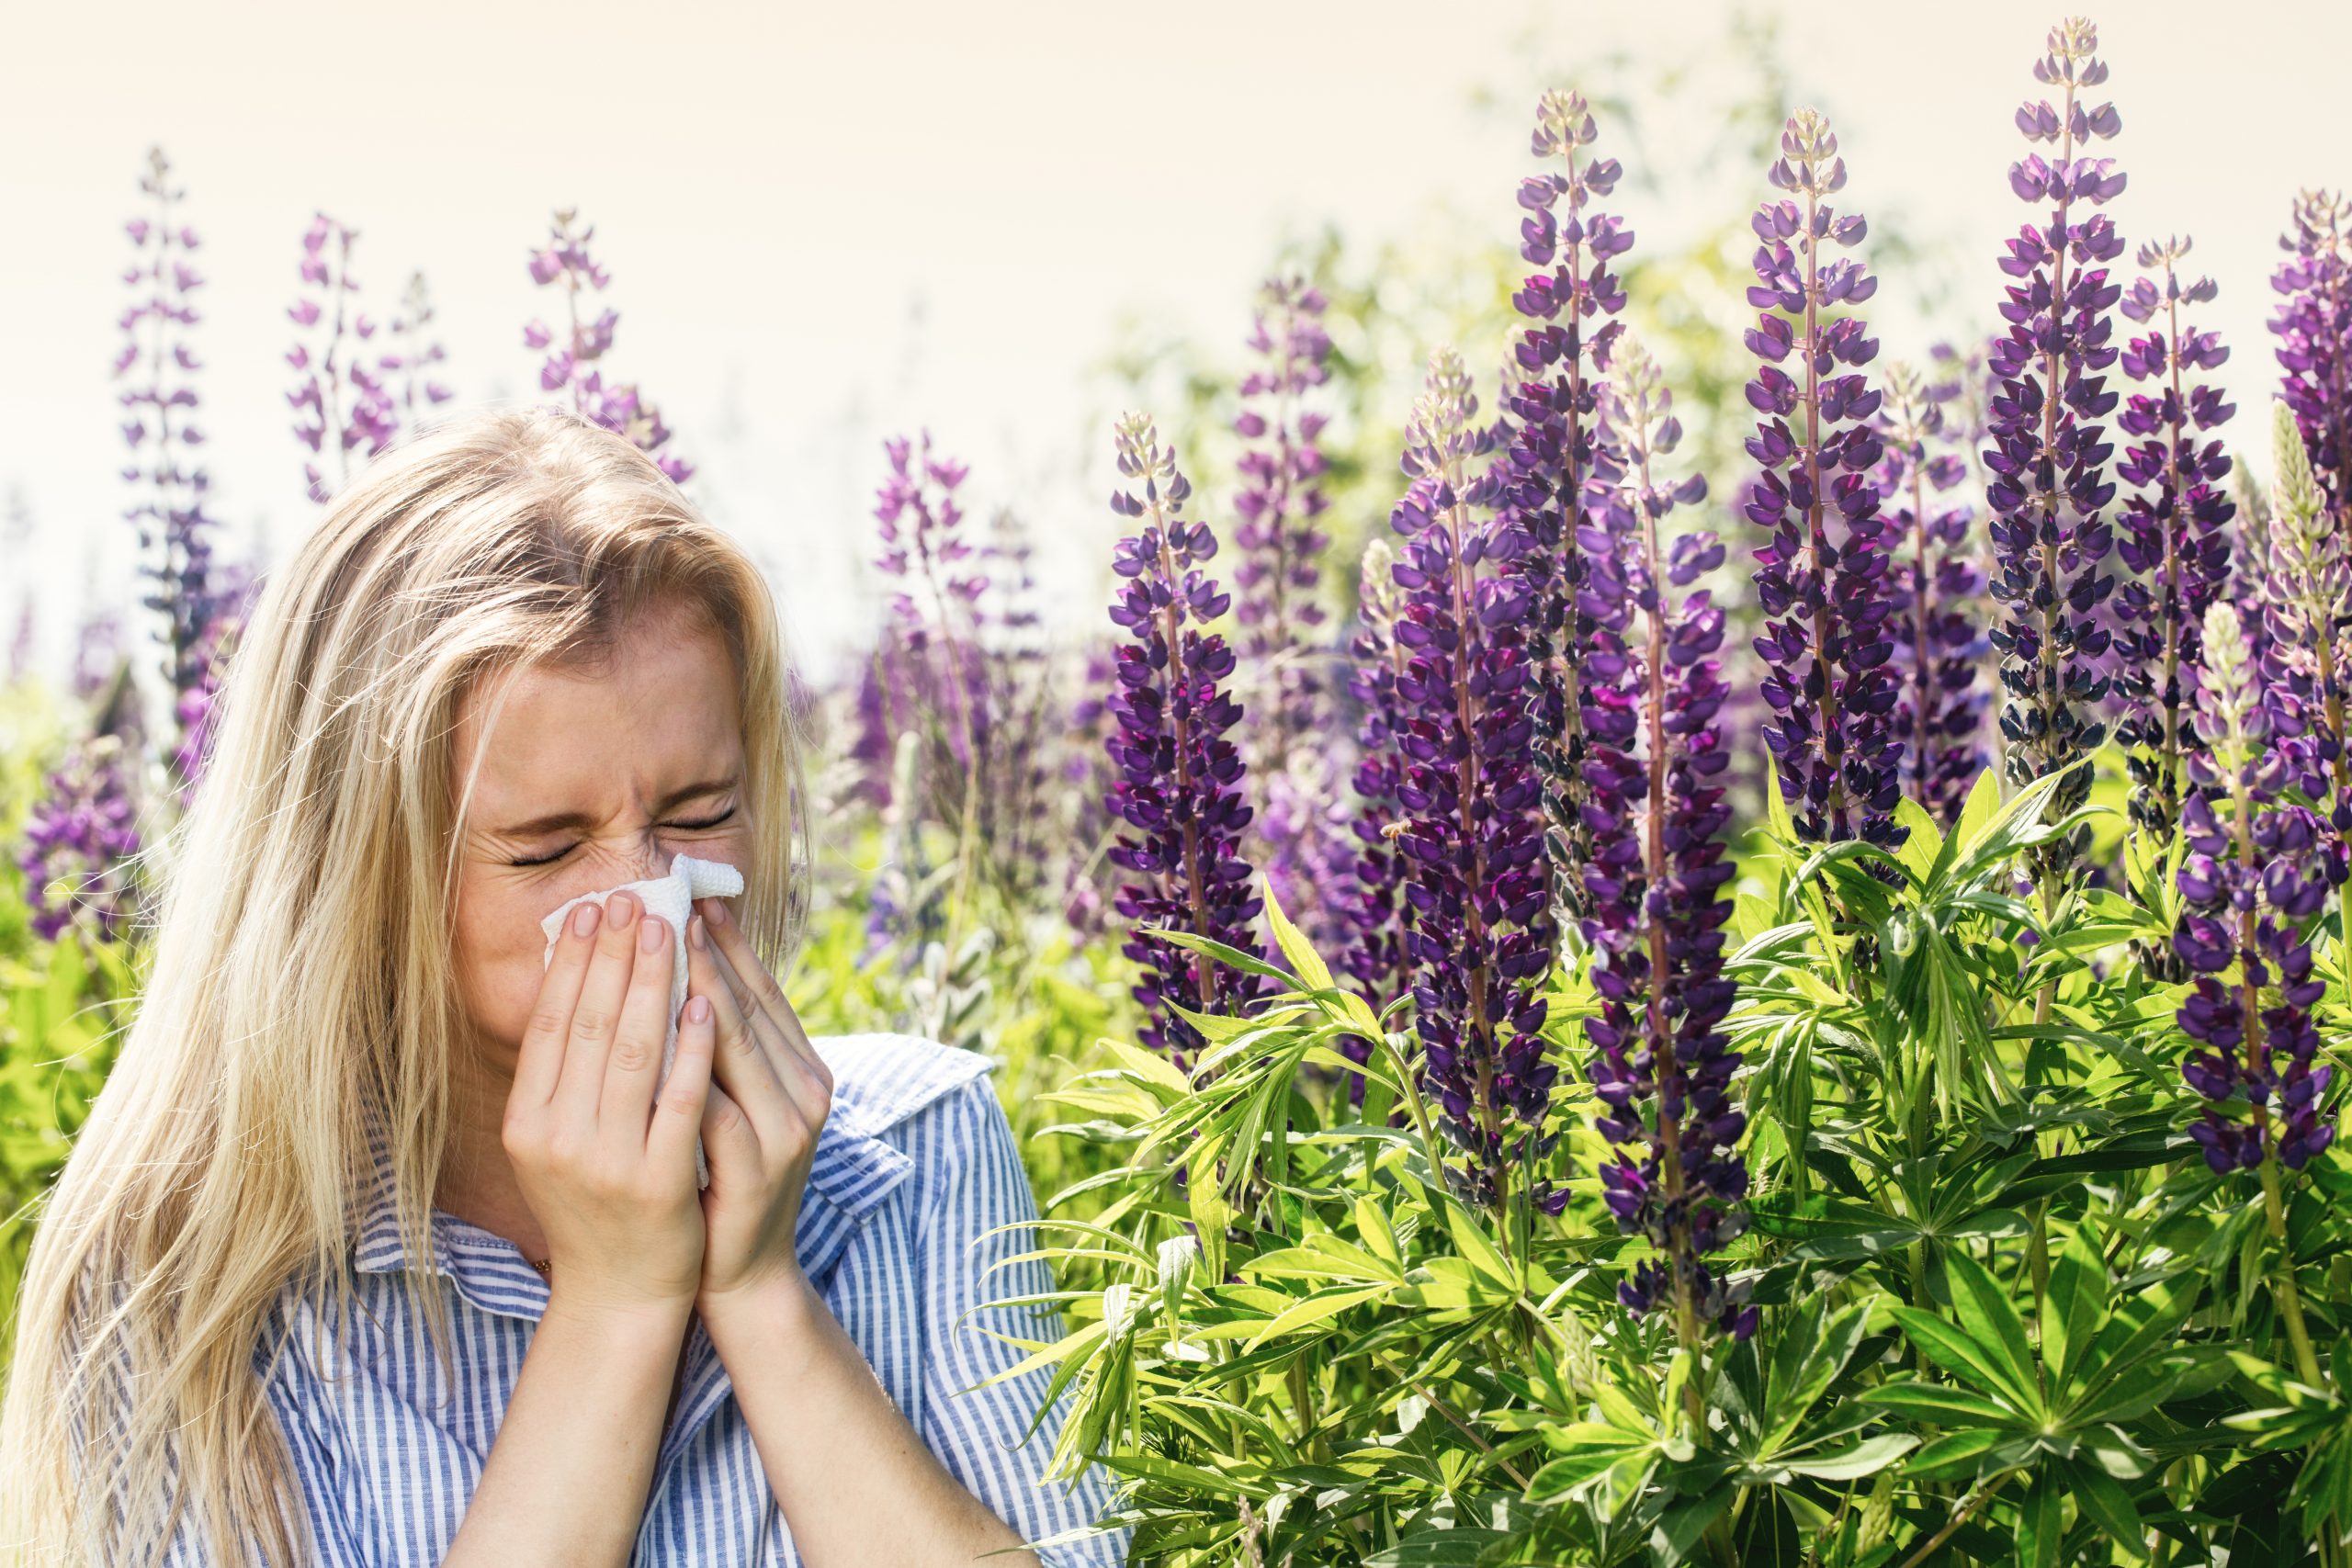 Seasonal Allergy Relief